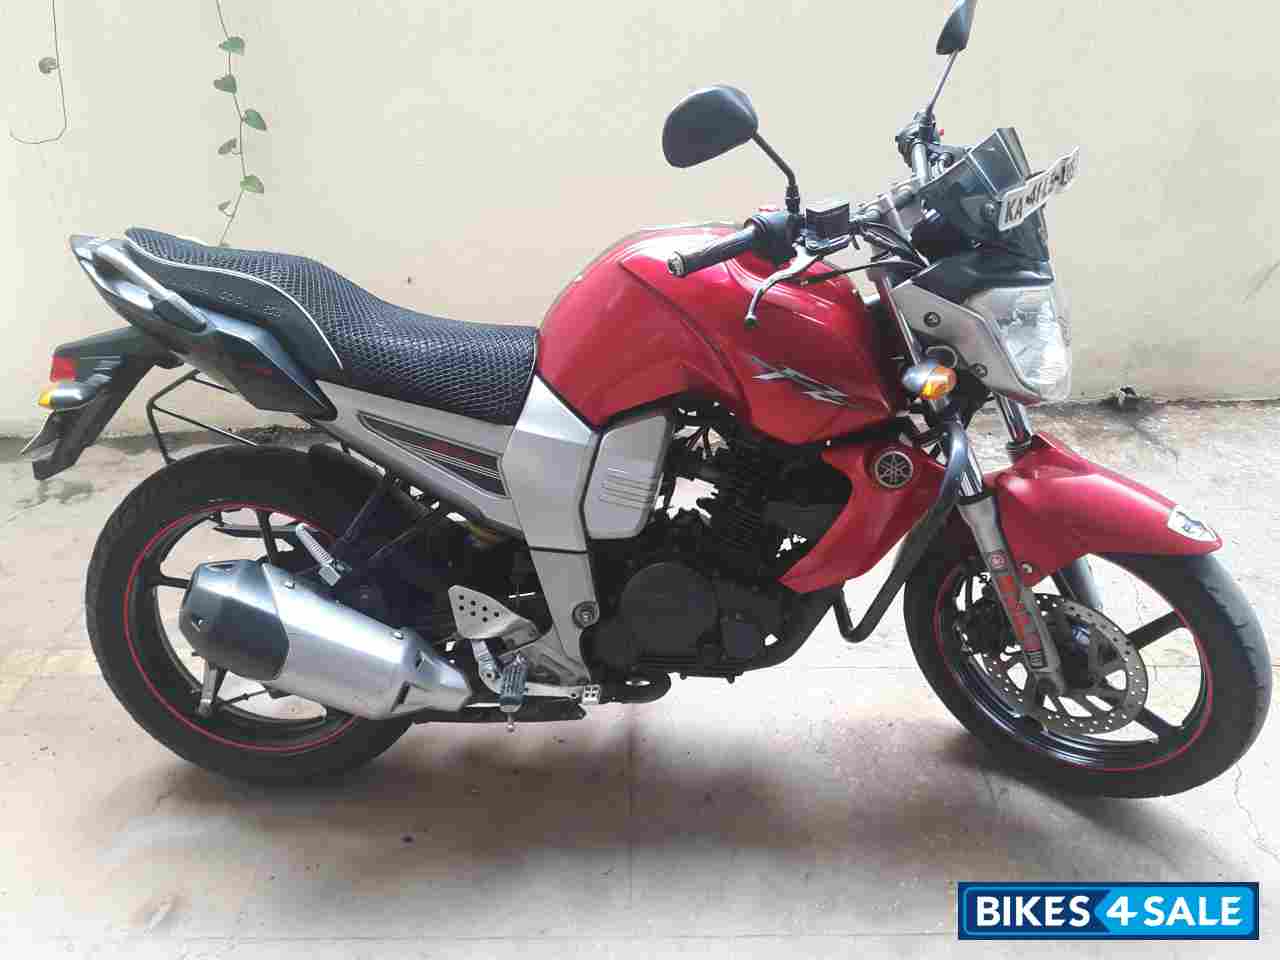 Used 2009 model Yamaha FZ16 for sale in Bangalore. ID 240084 - Bikes4Sale